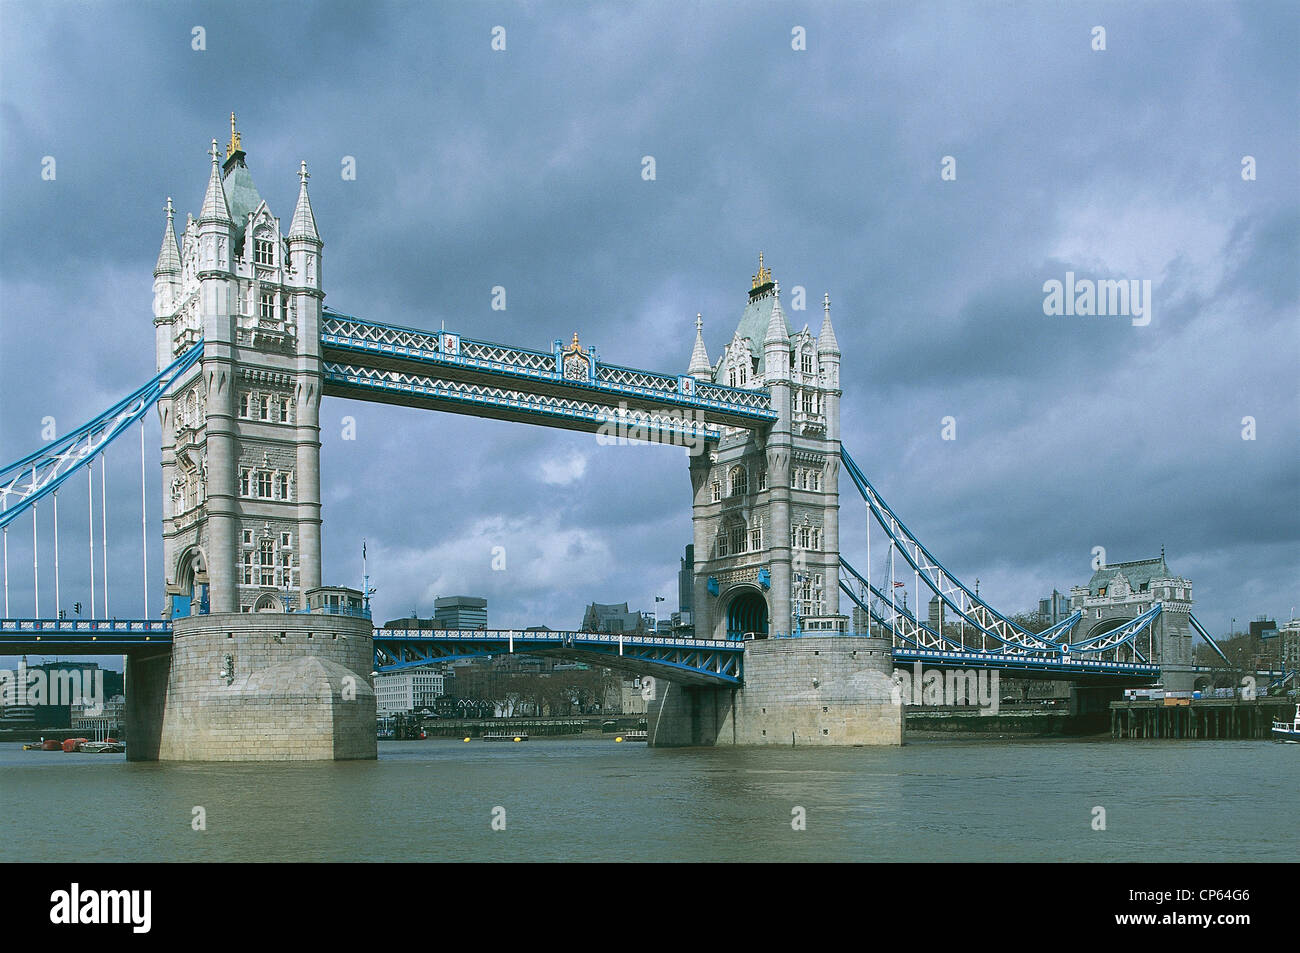 United Kingdom England London. Tower Bridge on the River Thames (architect Horace Jones, engineer John Wolfe Barry, 1886-1894). Stock Photo